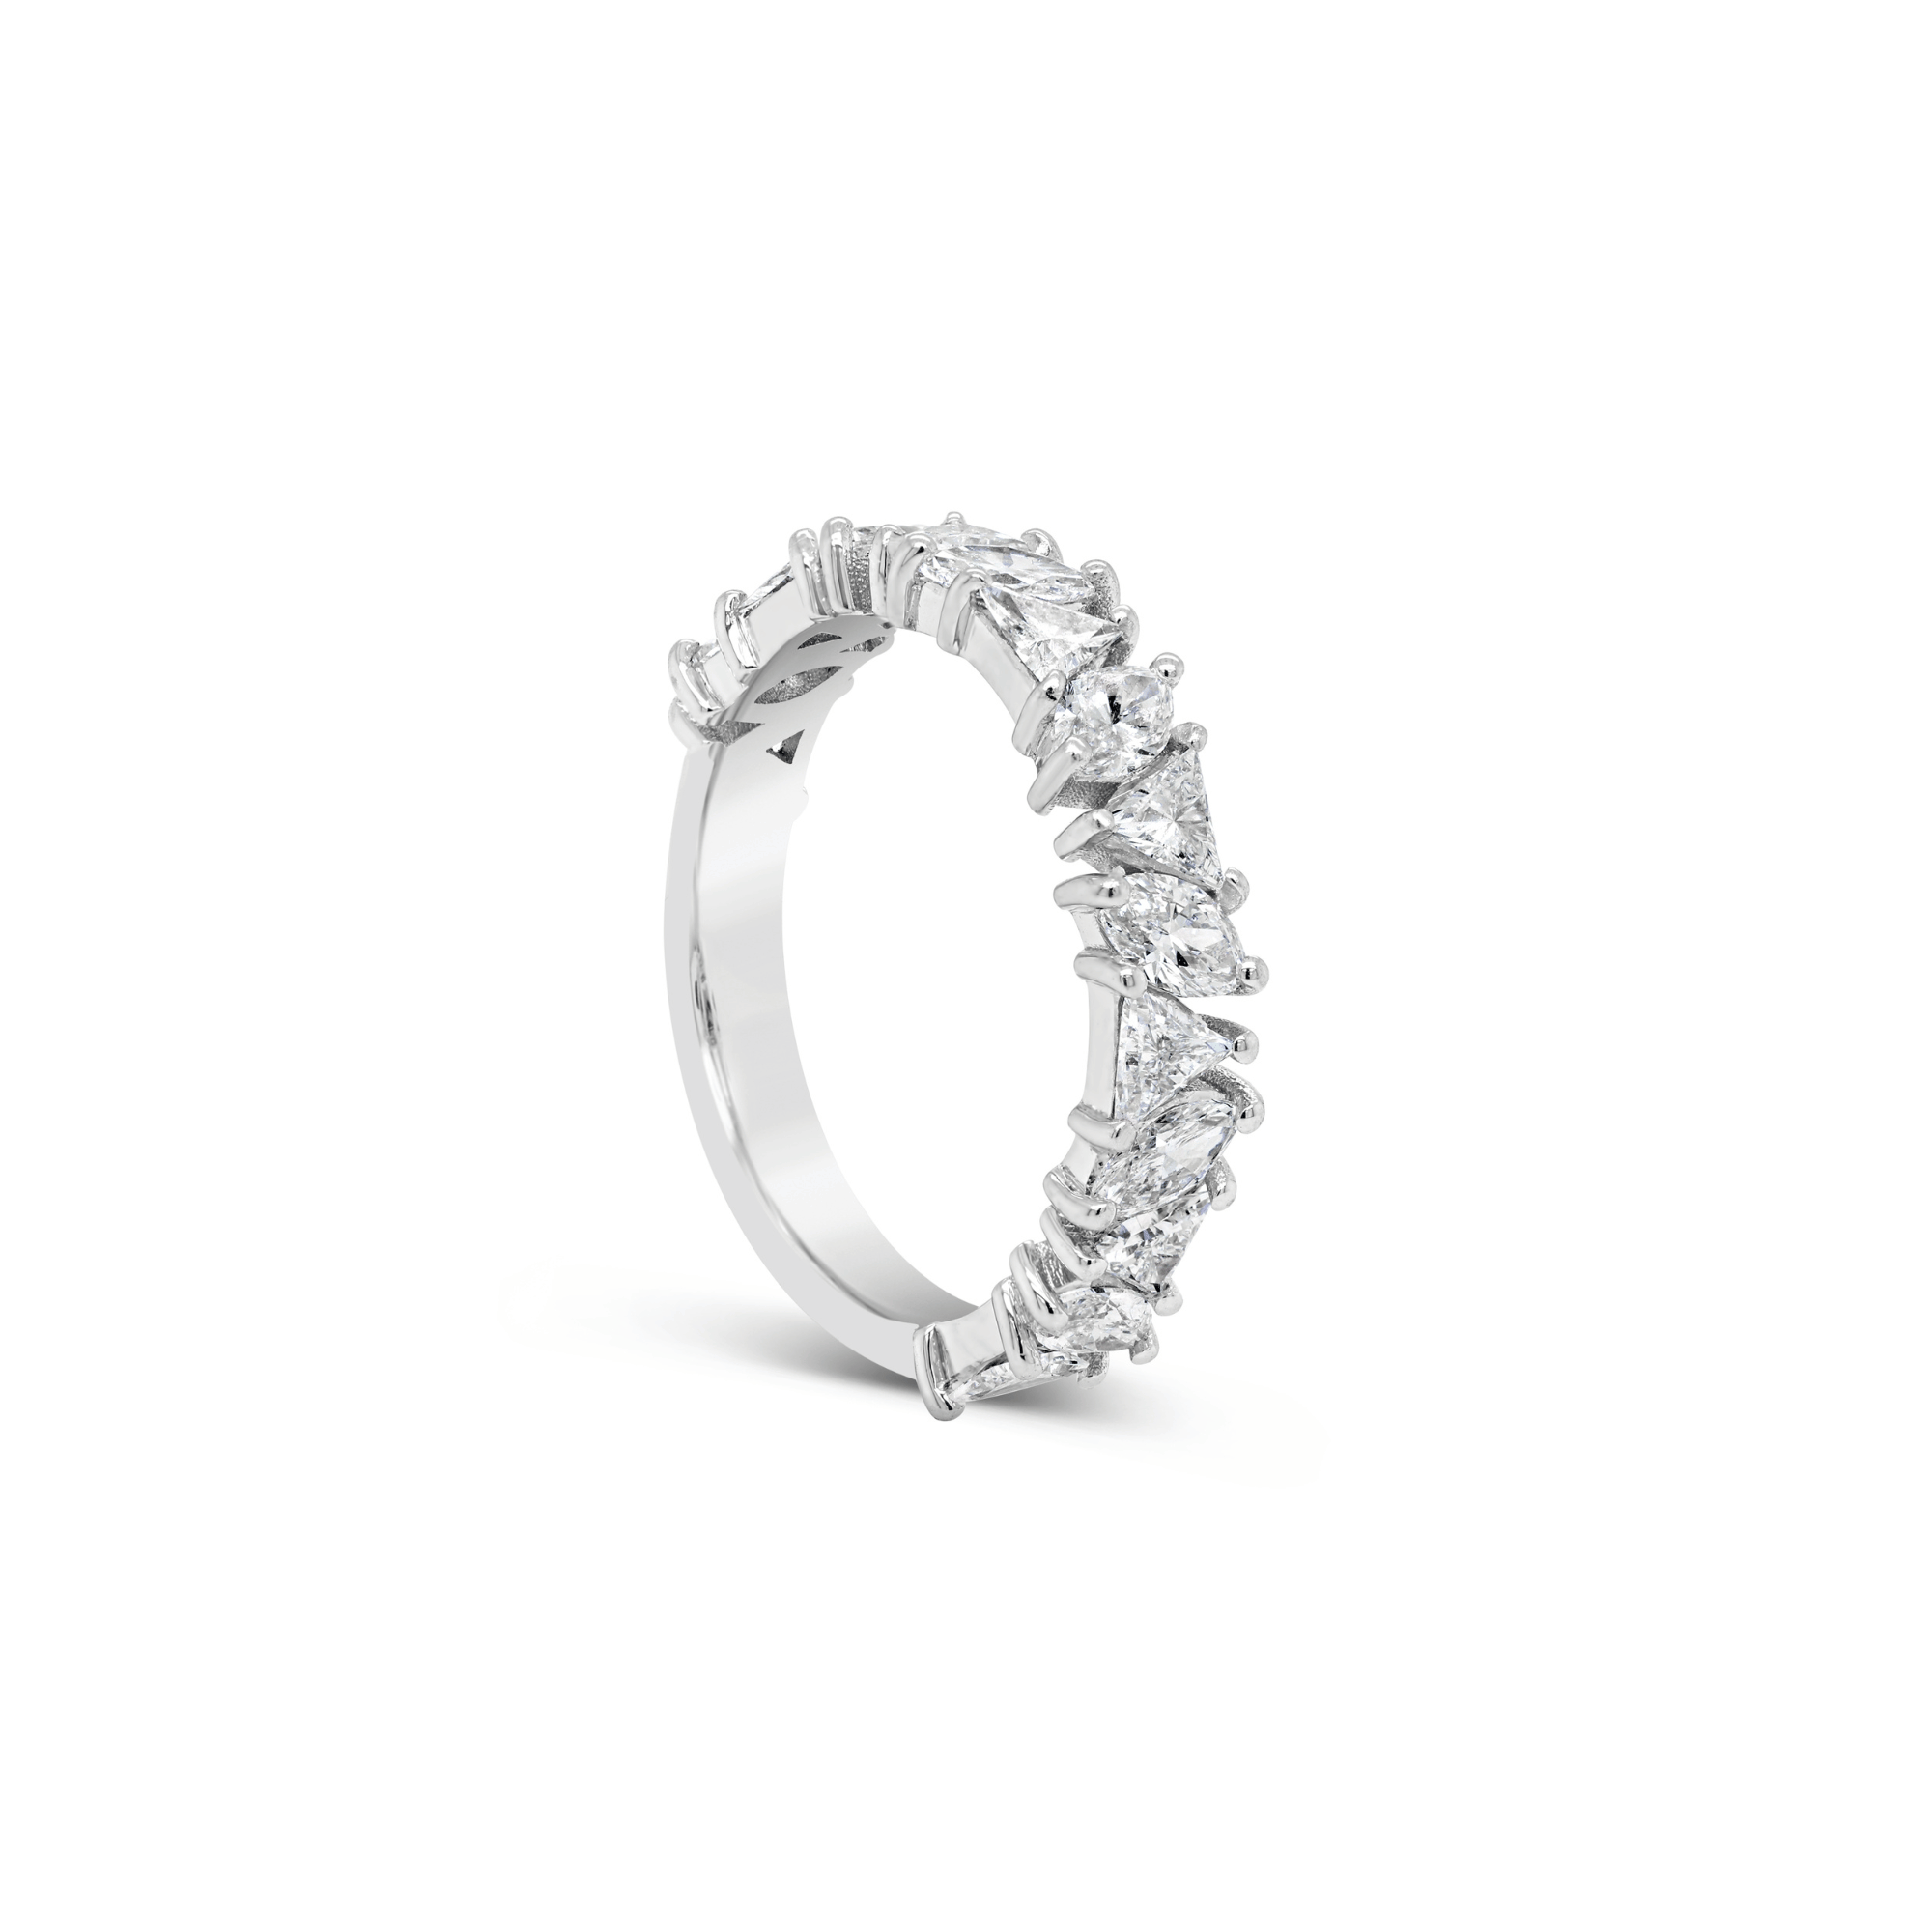 Mixed cut diamond wedding ring